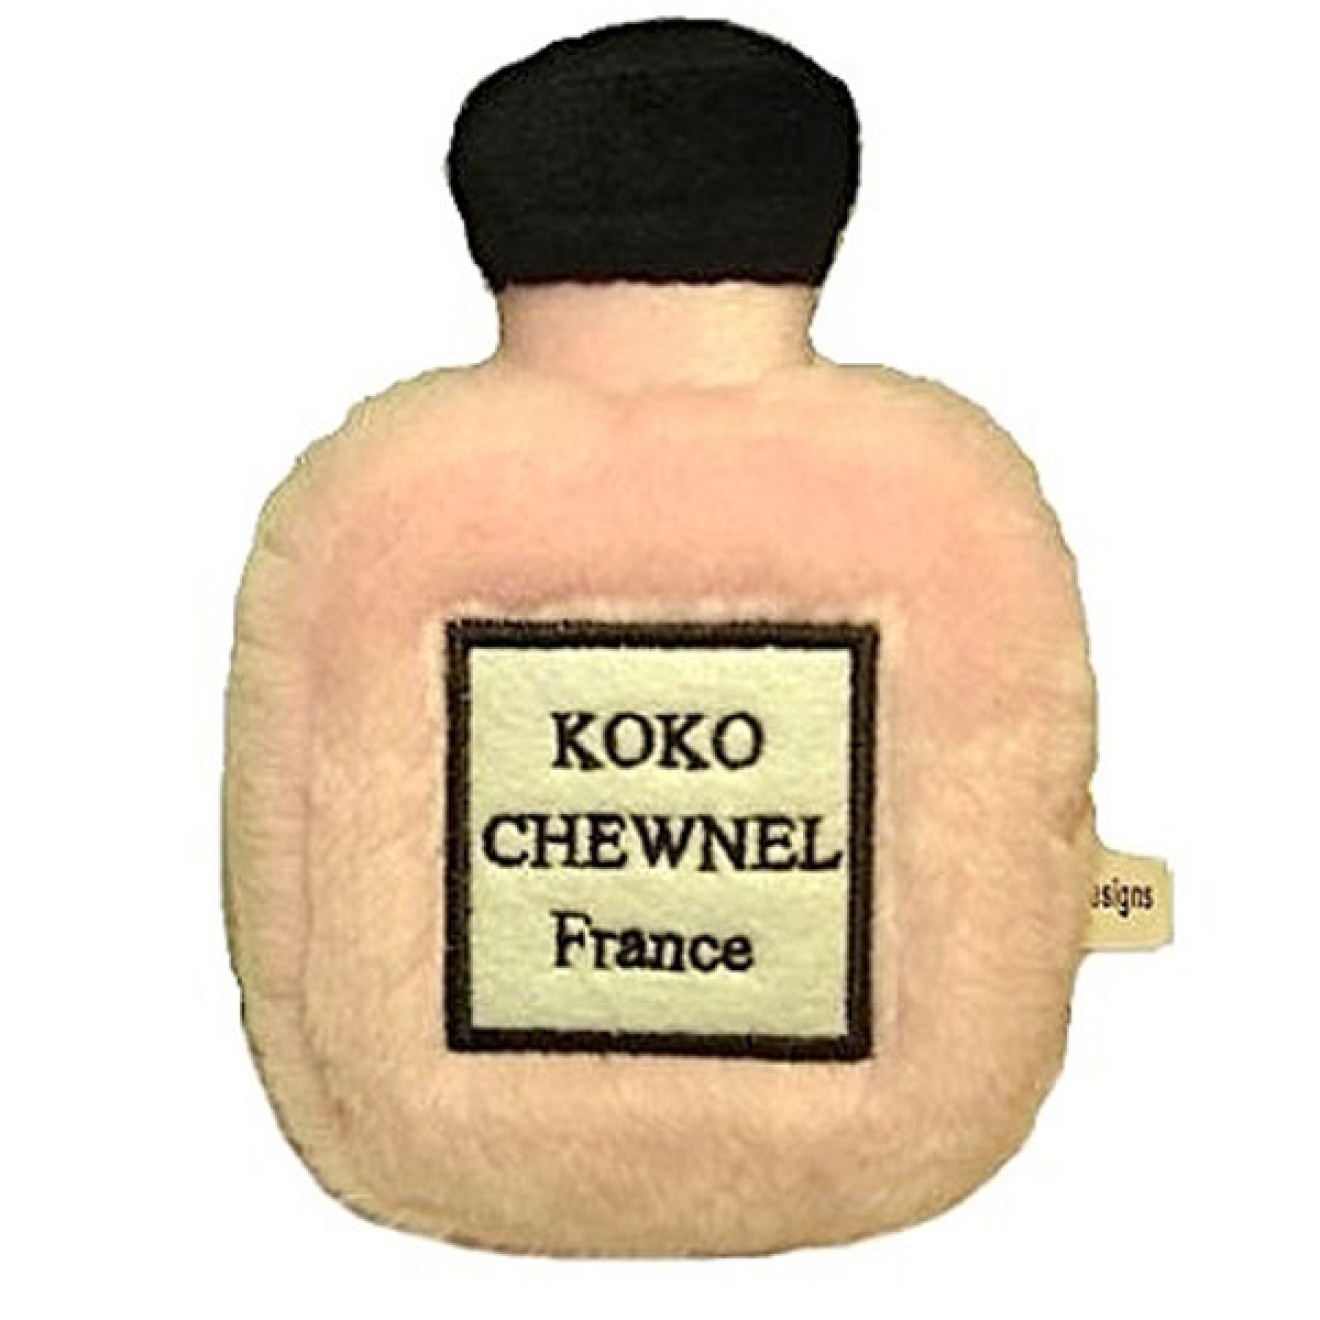 Parfüm-Hundespielzeug Chewnel